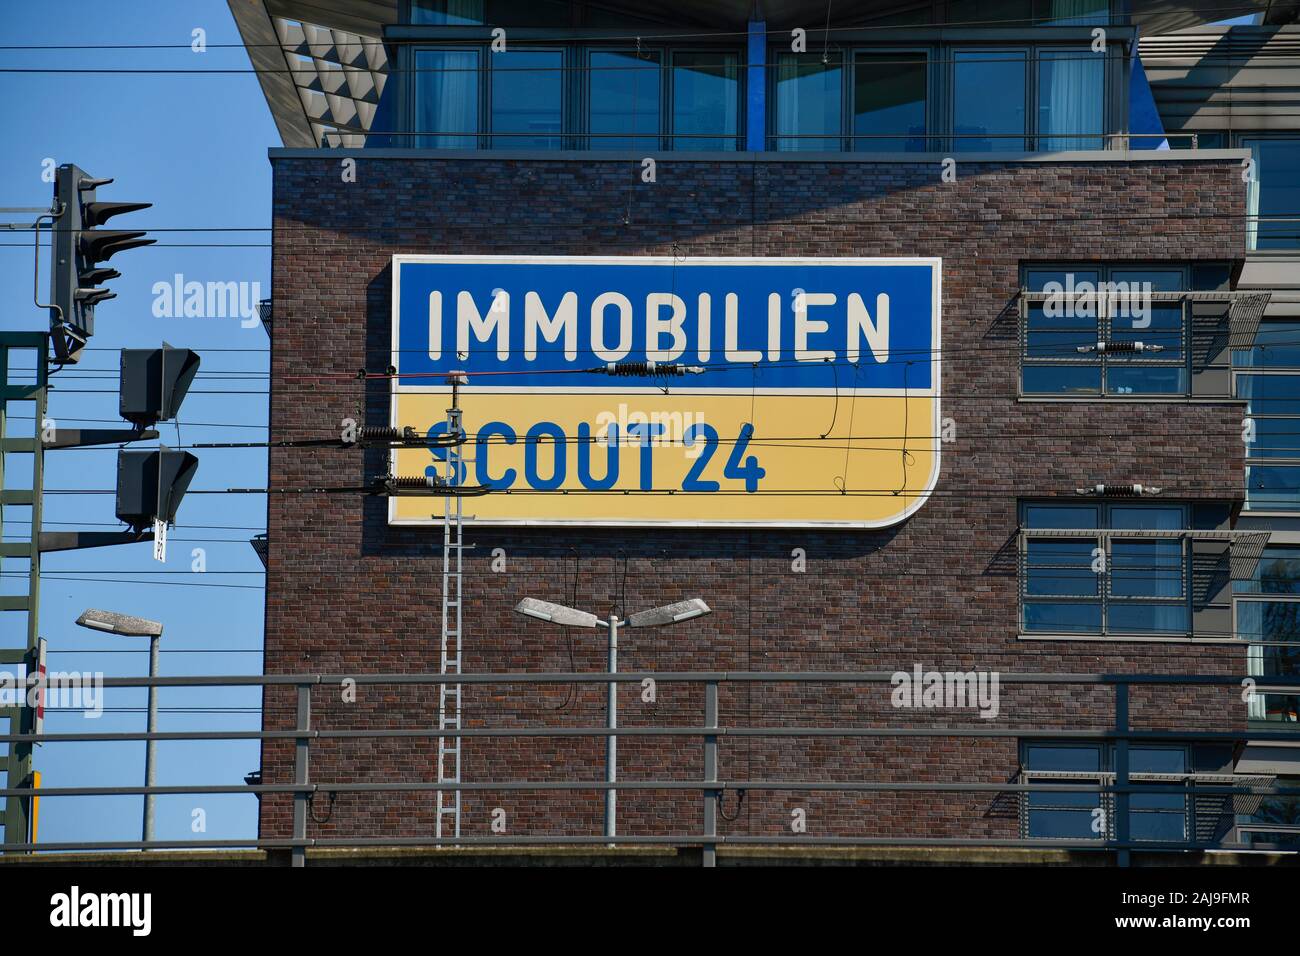 Immobilien Scout, Andreasstraße, Friedrichshain di Berlino, Deutschland  Foto stock - Alamy